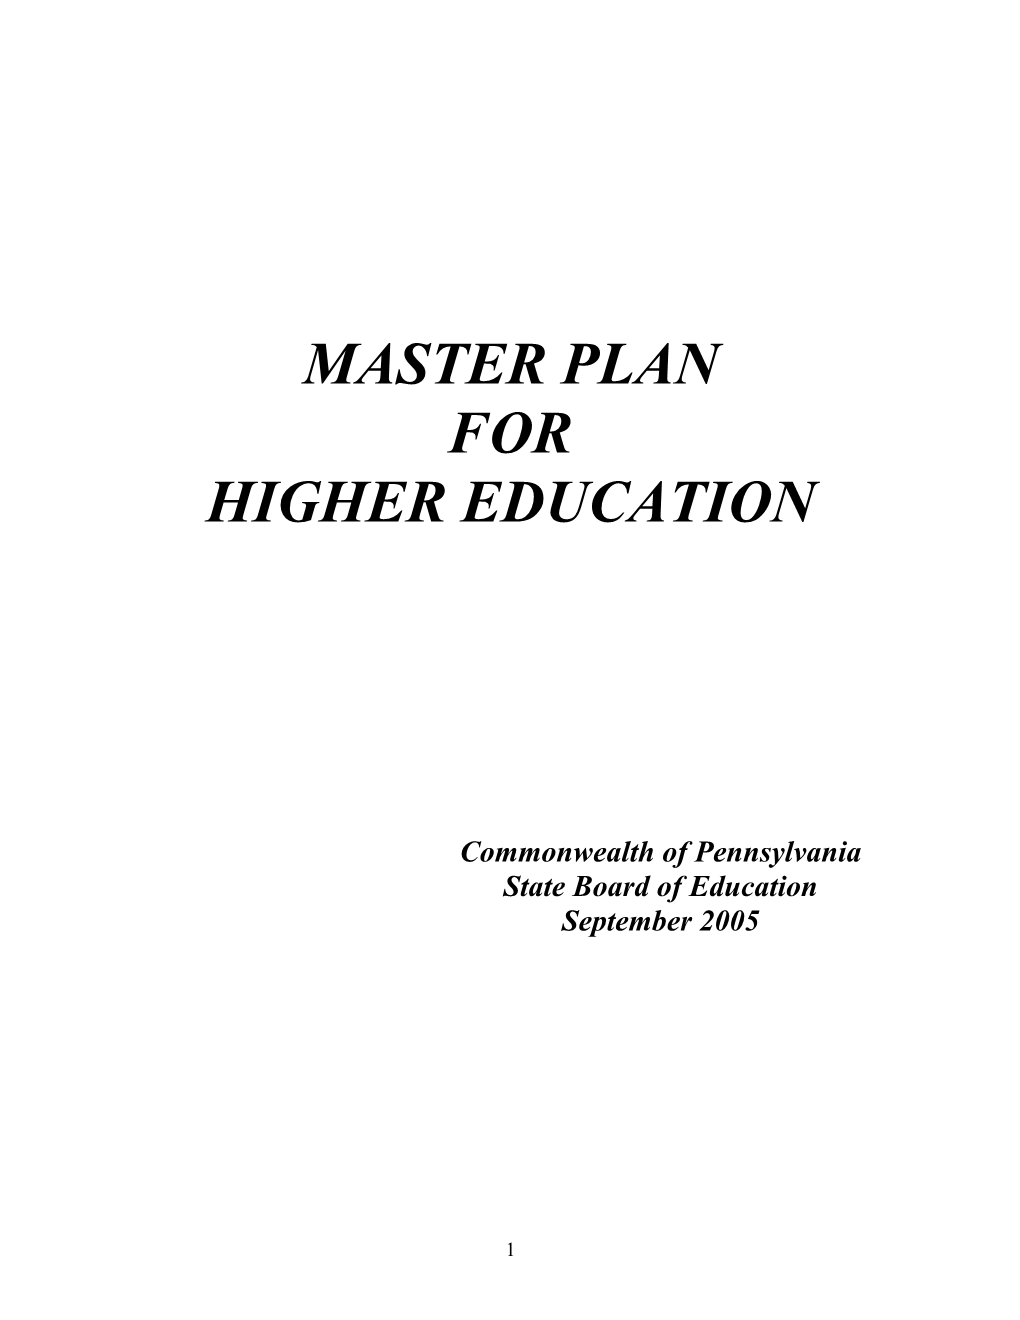 Master Plan for Higher Education